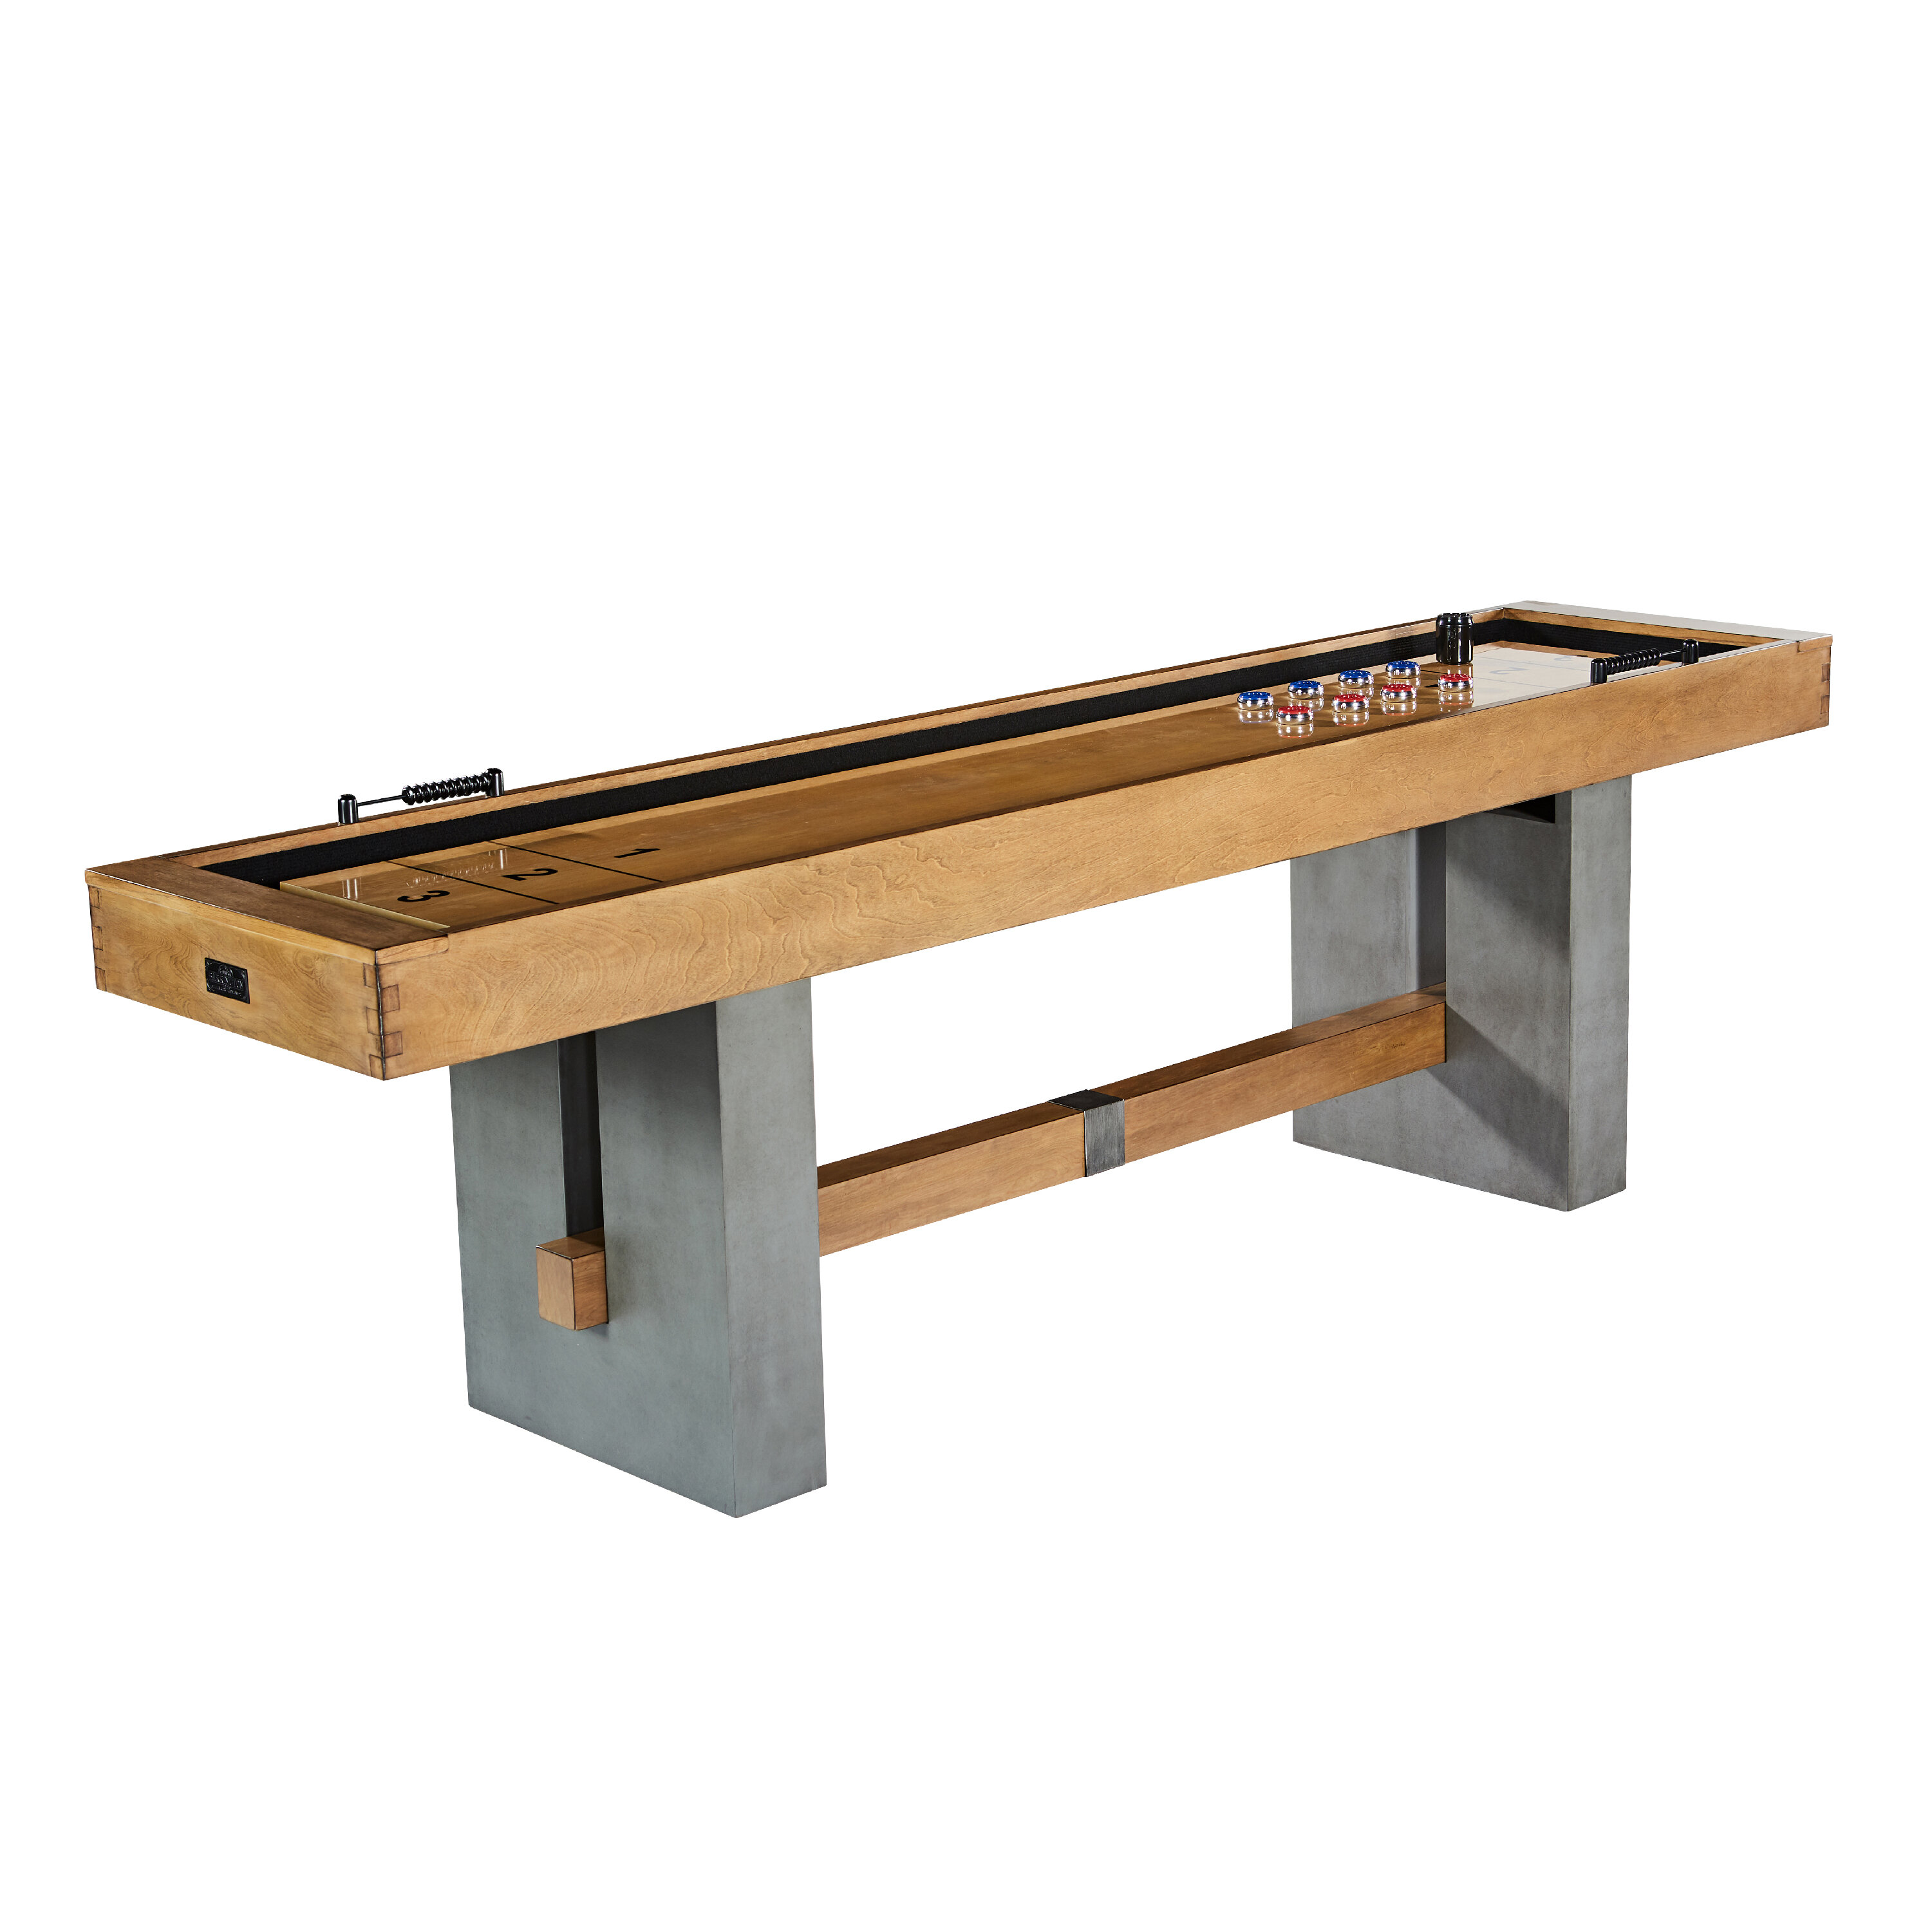 Barrington Billiards Company Urban 9 Shuffleboard Table And Reviews